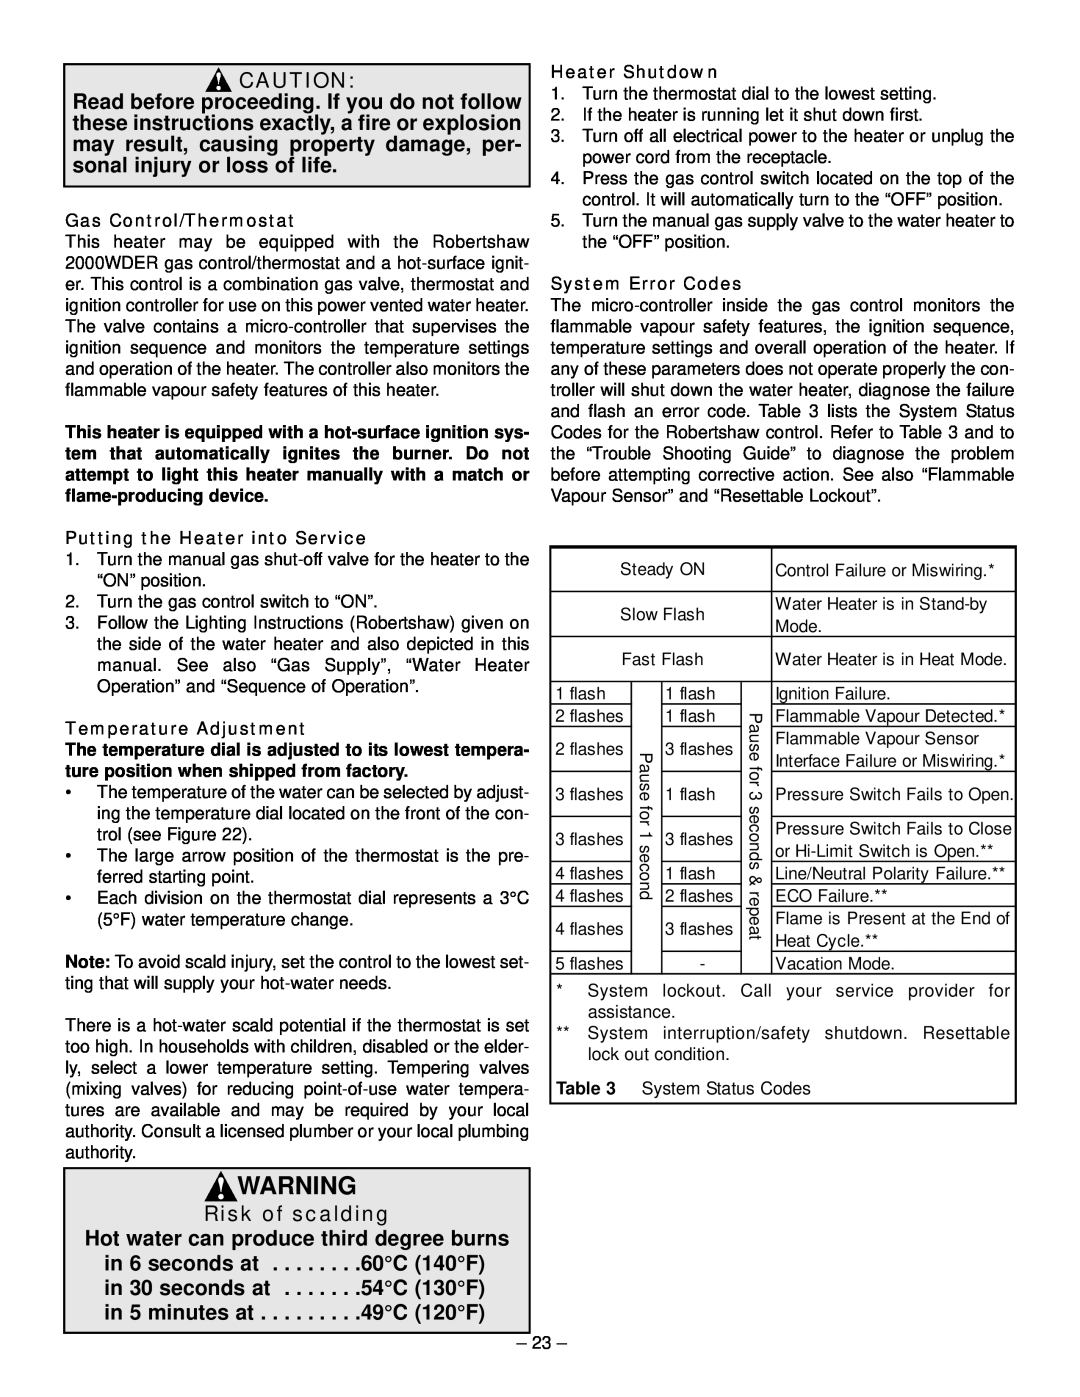 GSW 319594-000 manual Risk of scalding 